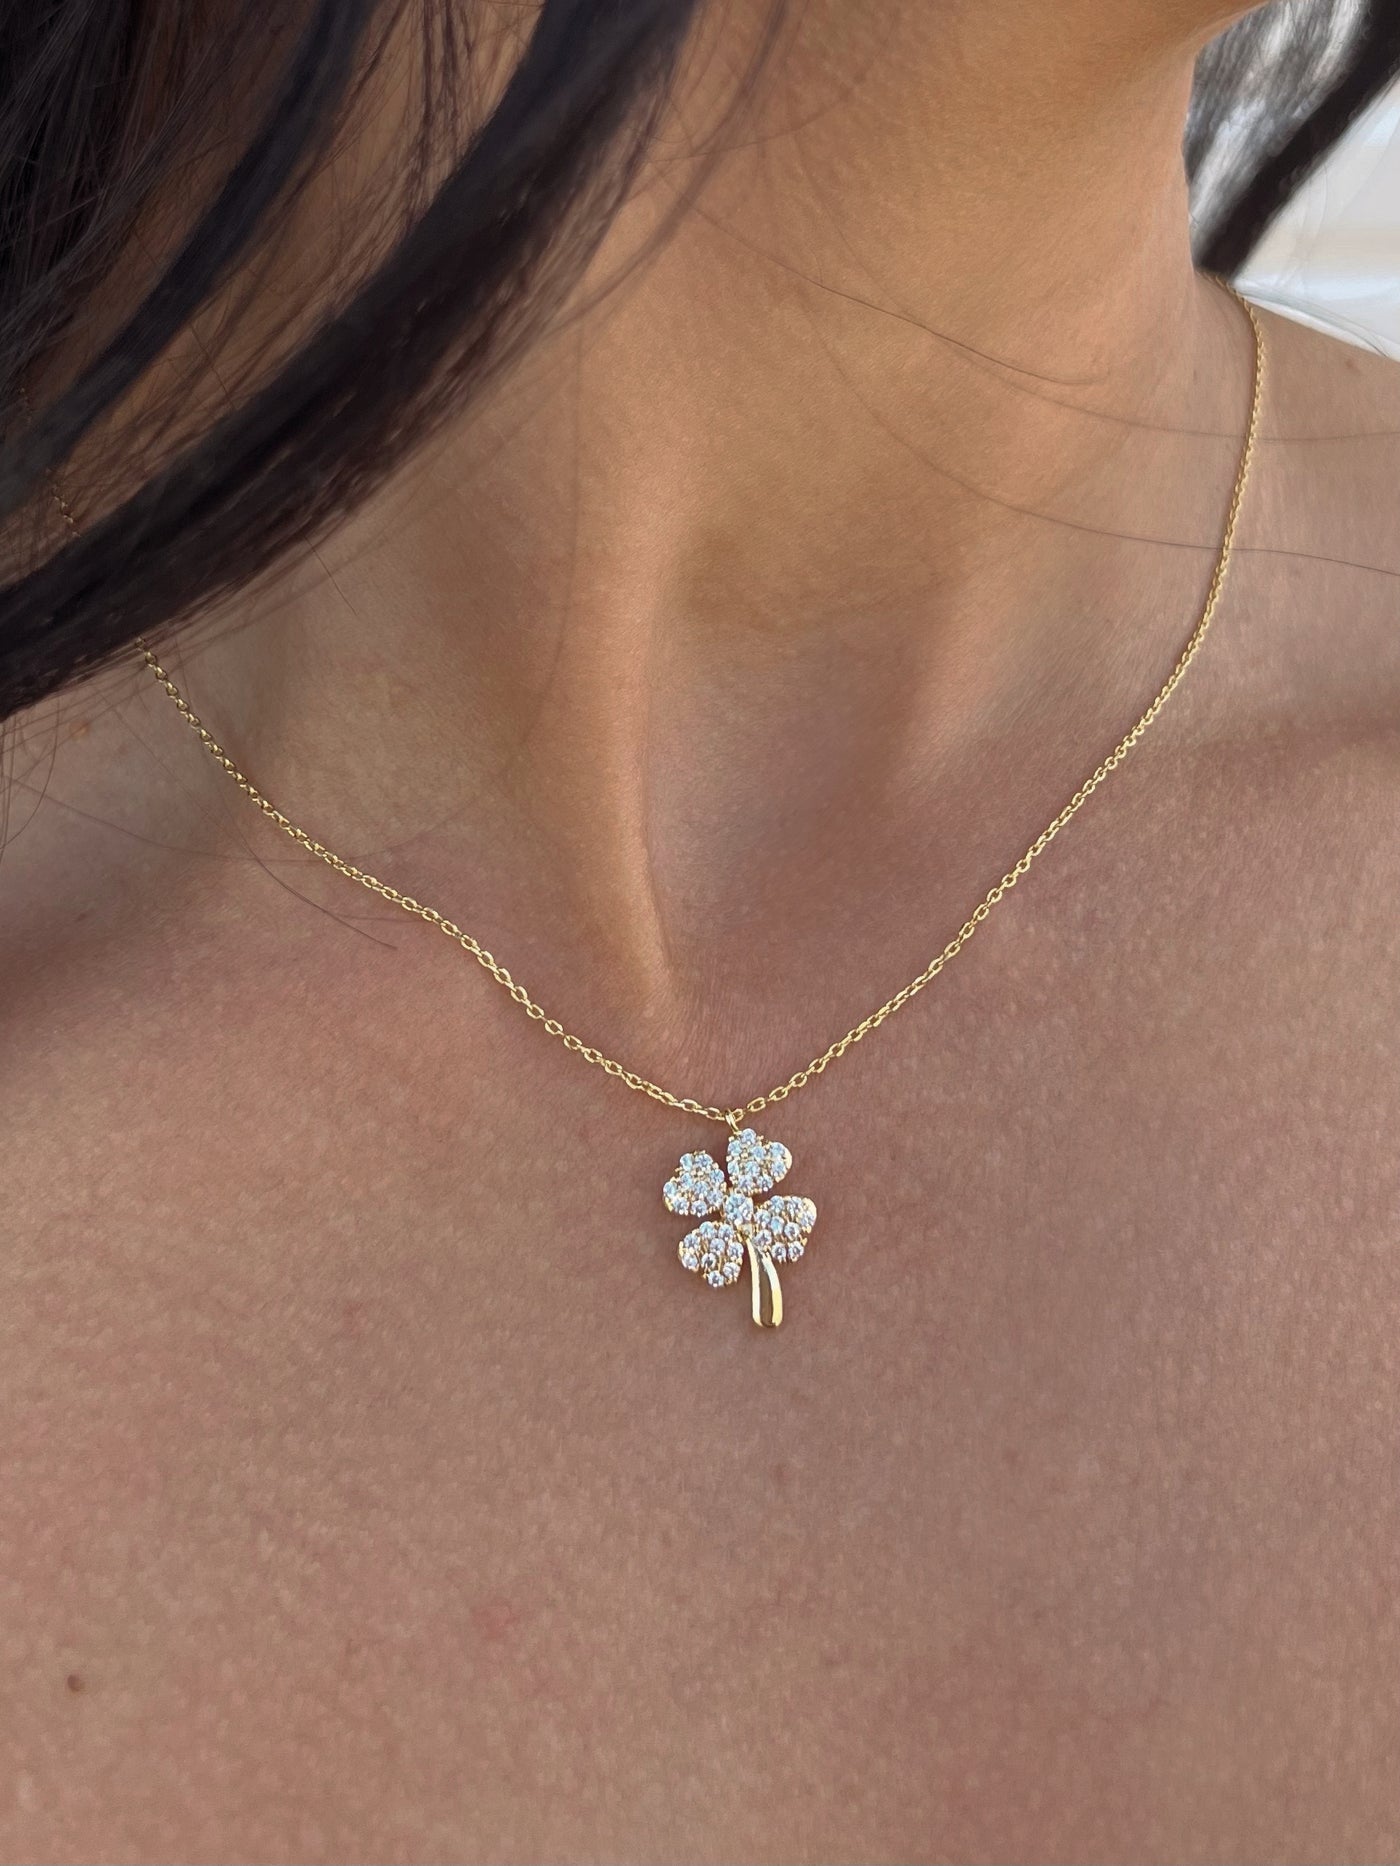 Four Of A Kind - Four Leaf Clover Charm Necklace